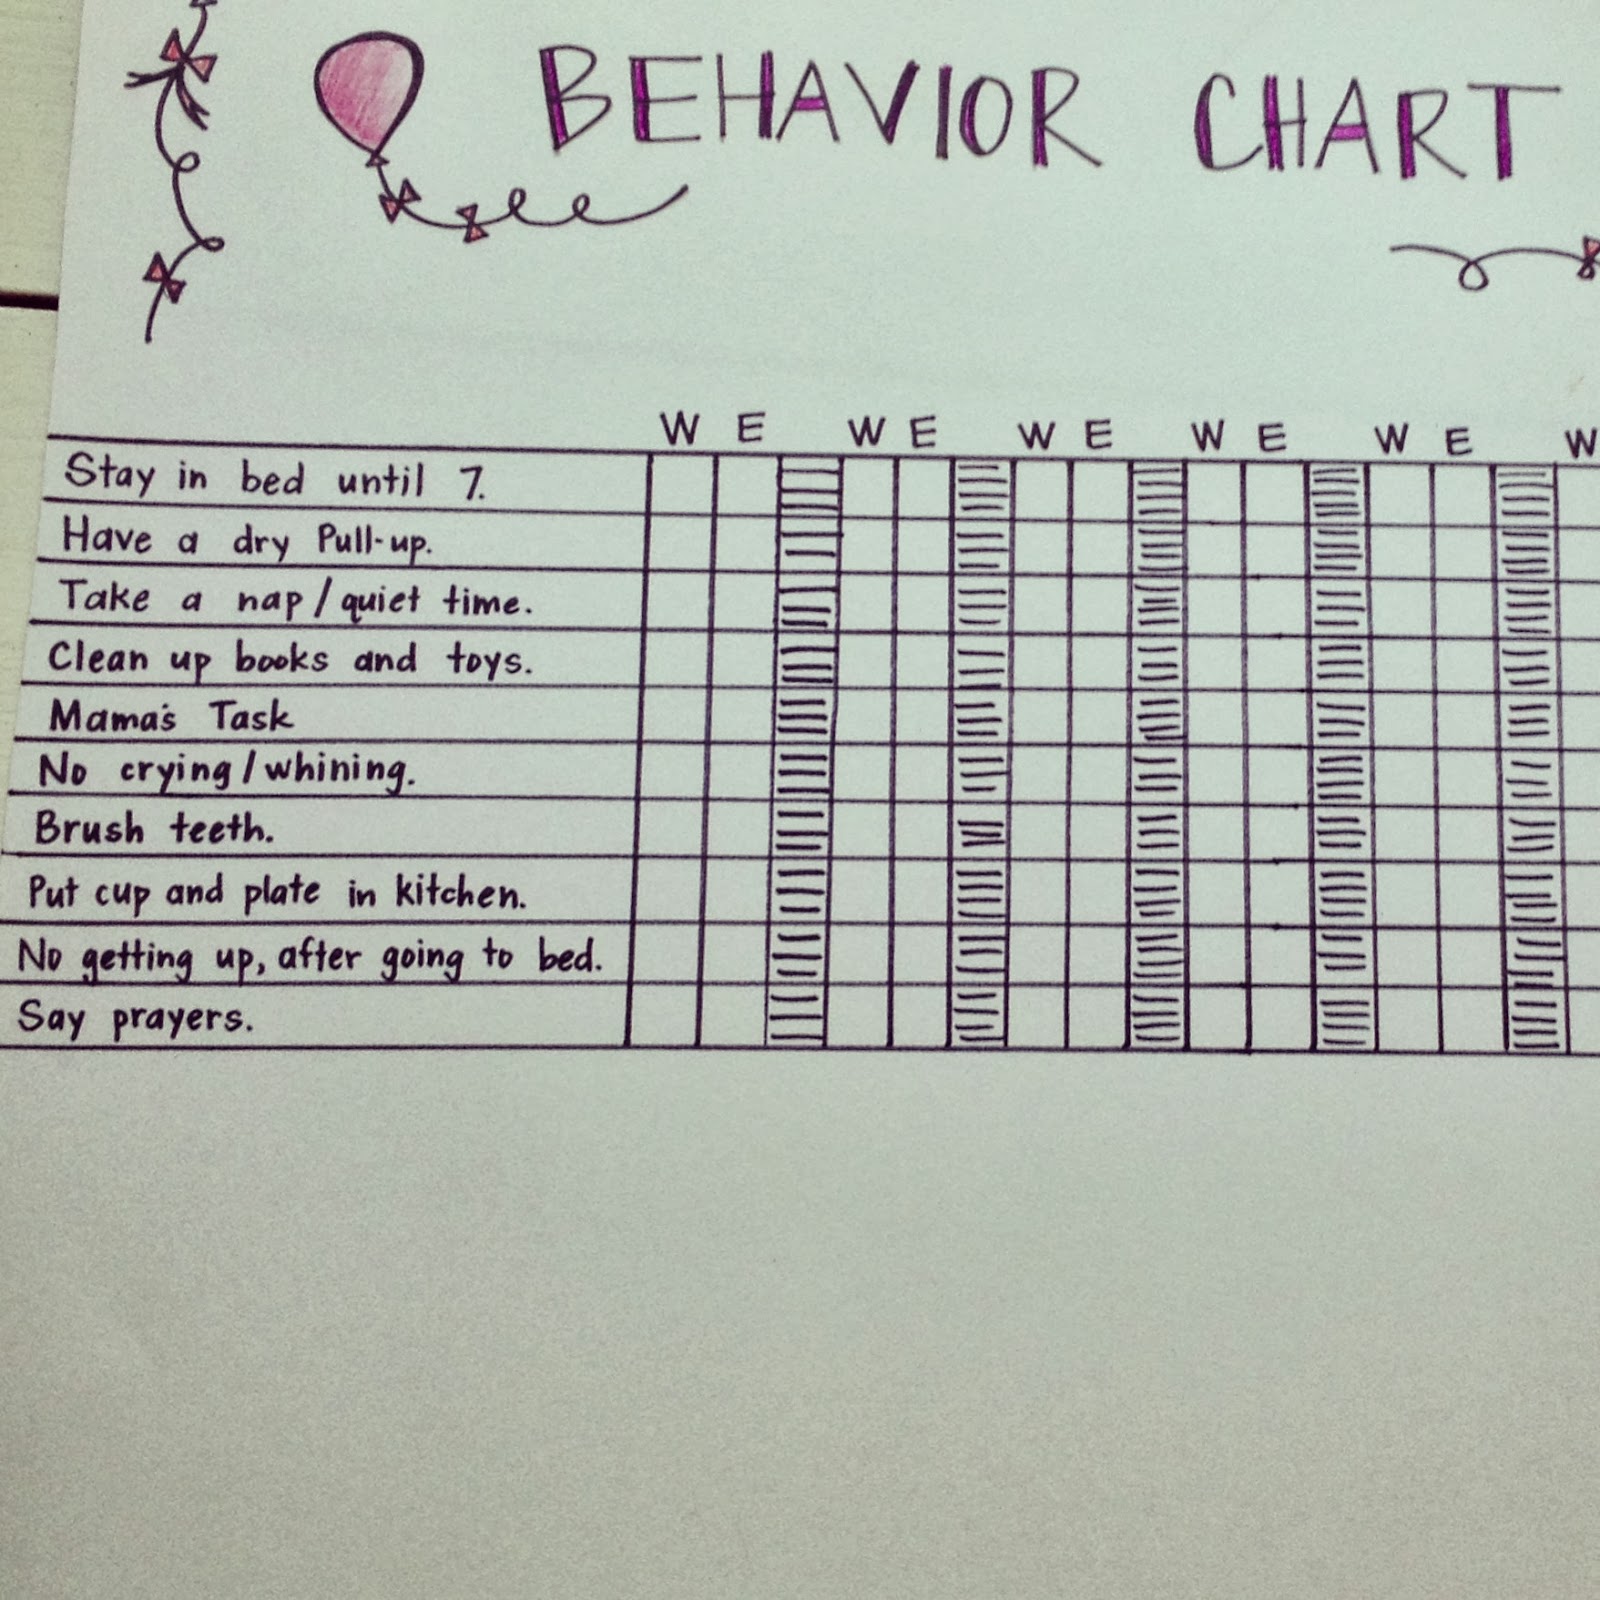 How To Make A Behavior Chart